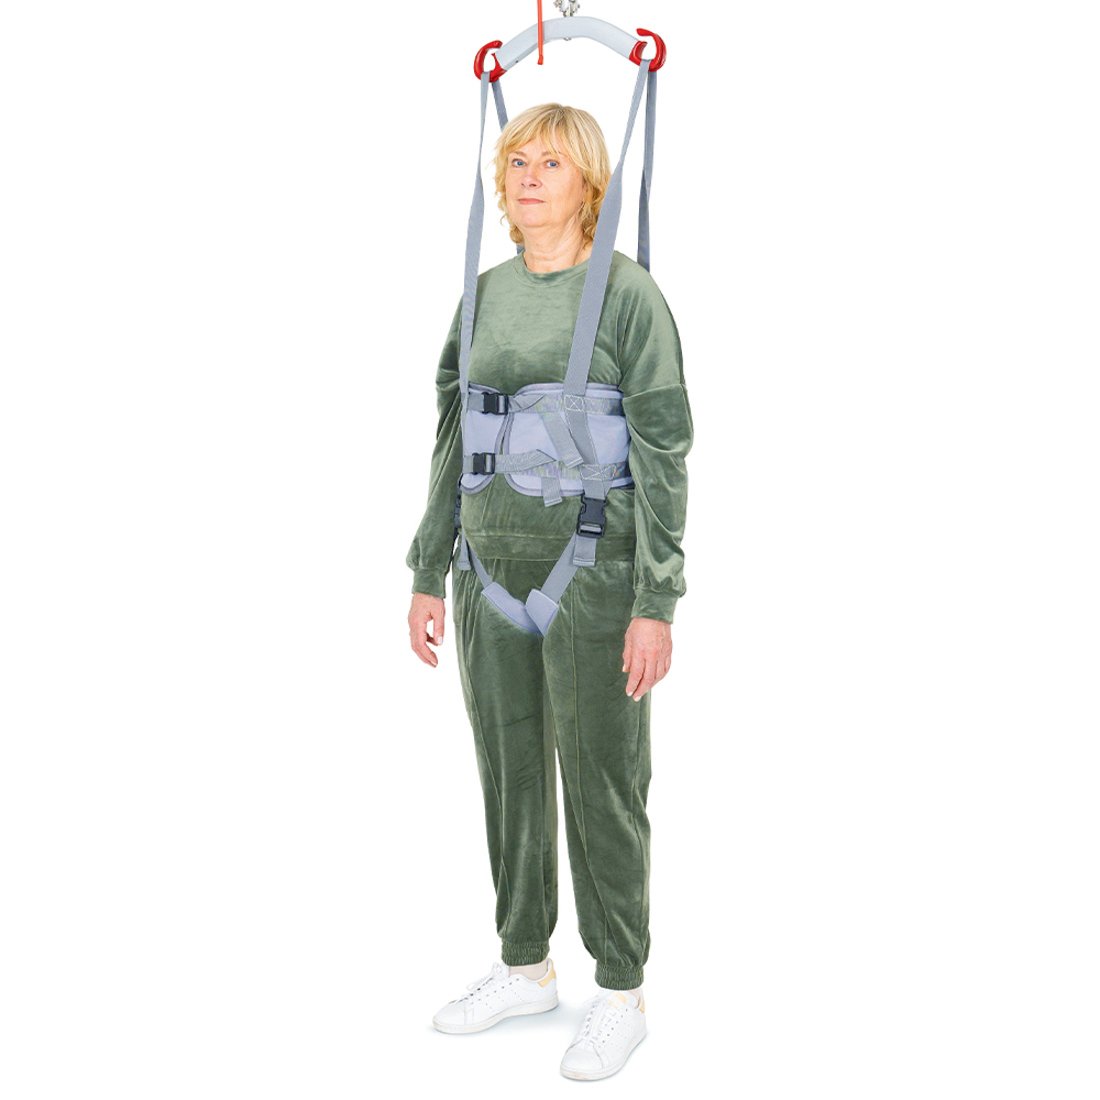 Molift UnoSling Ambulating Vest with groin straps front.jpg